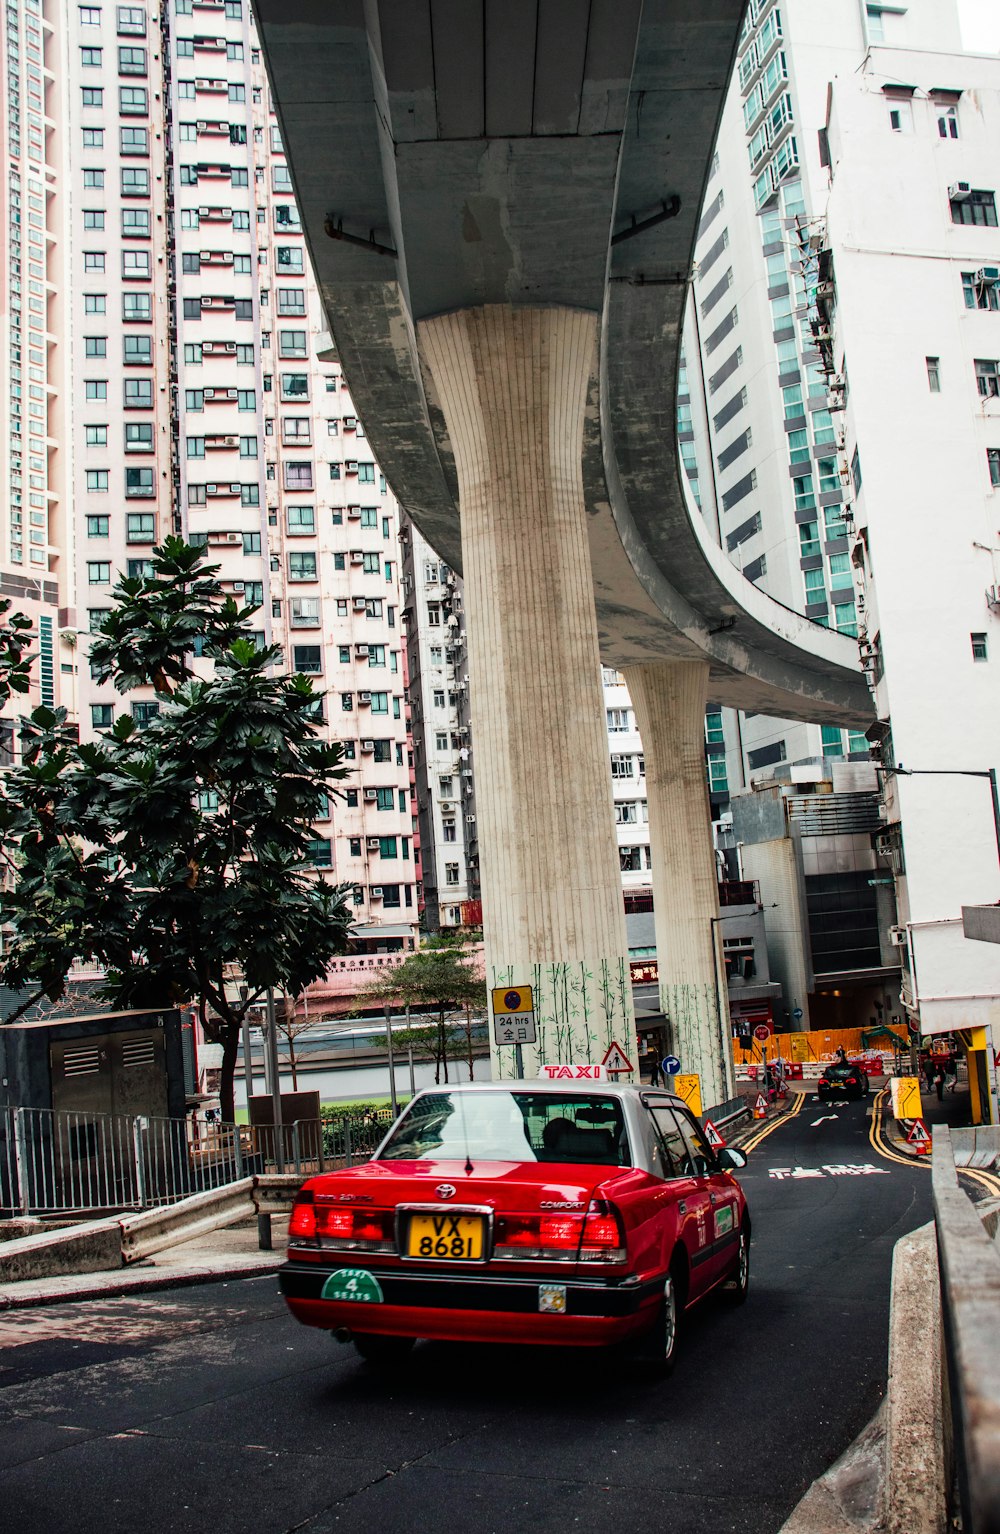 a red car driving under a bridge in a city